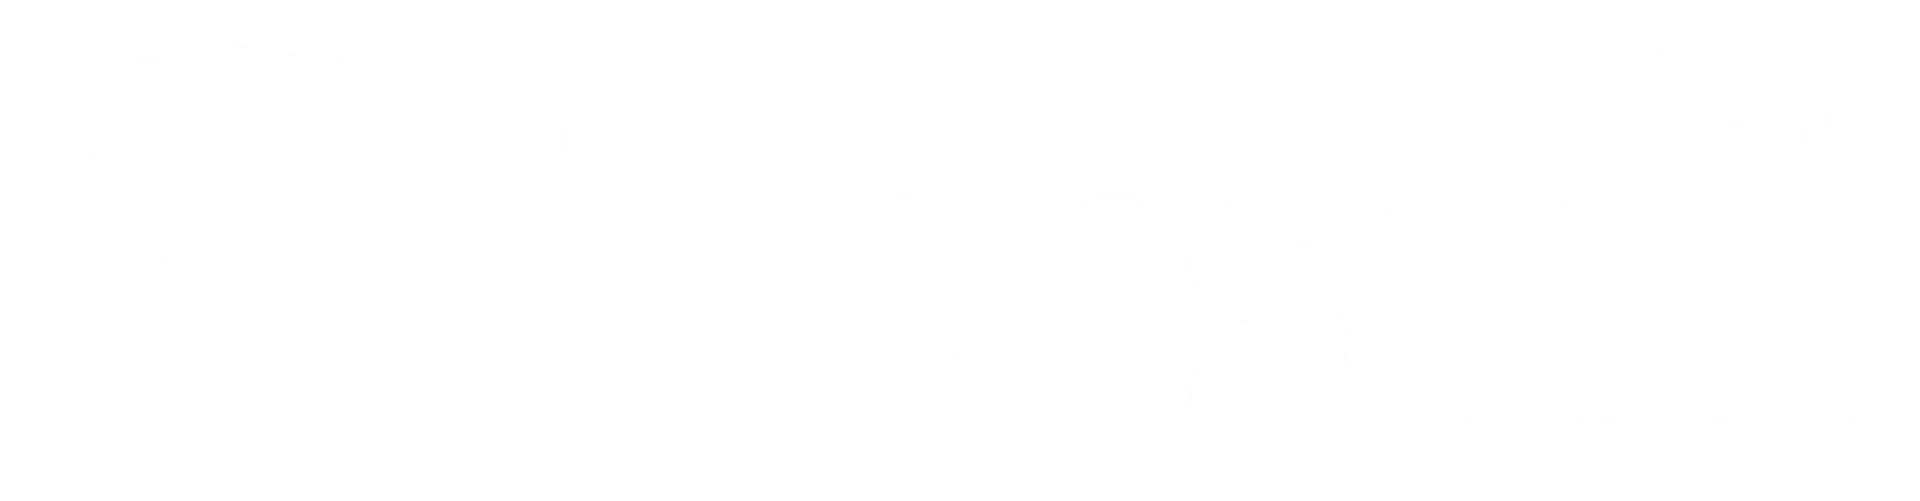 trustifi logo